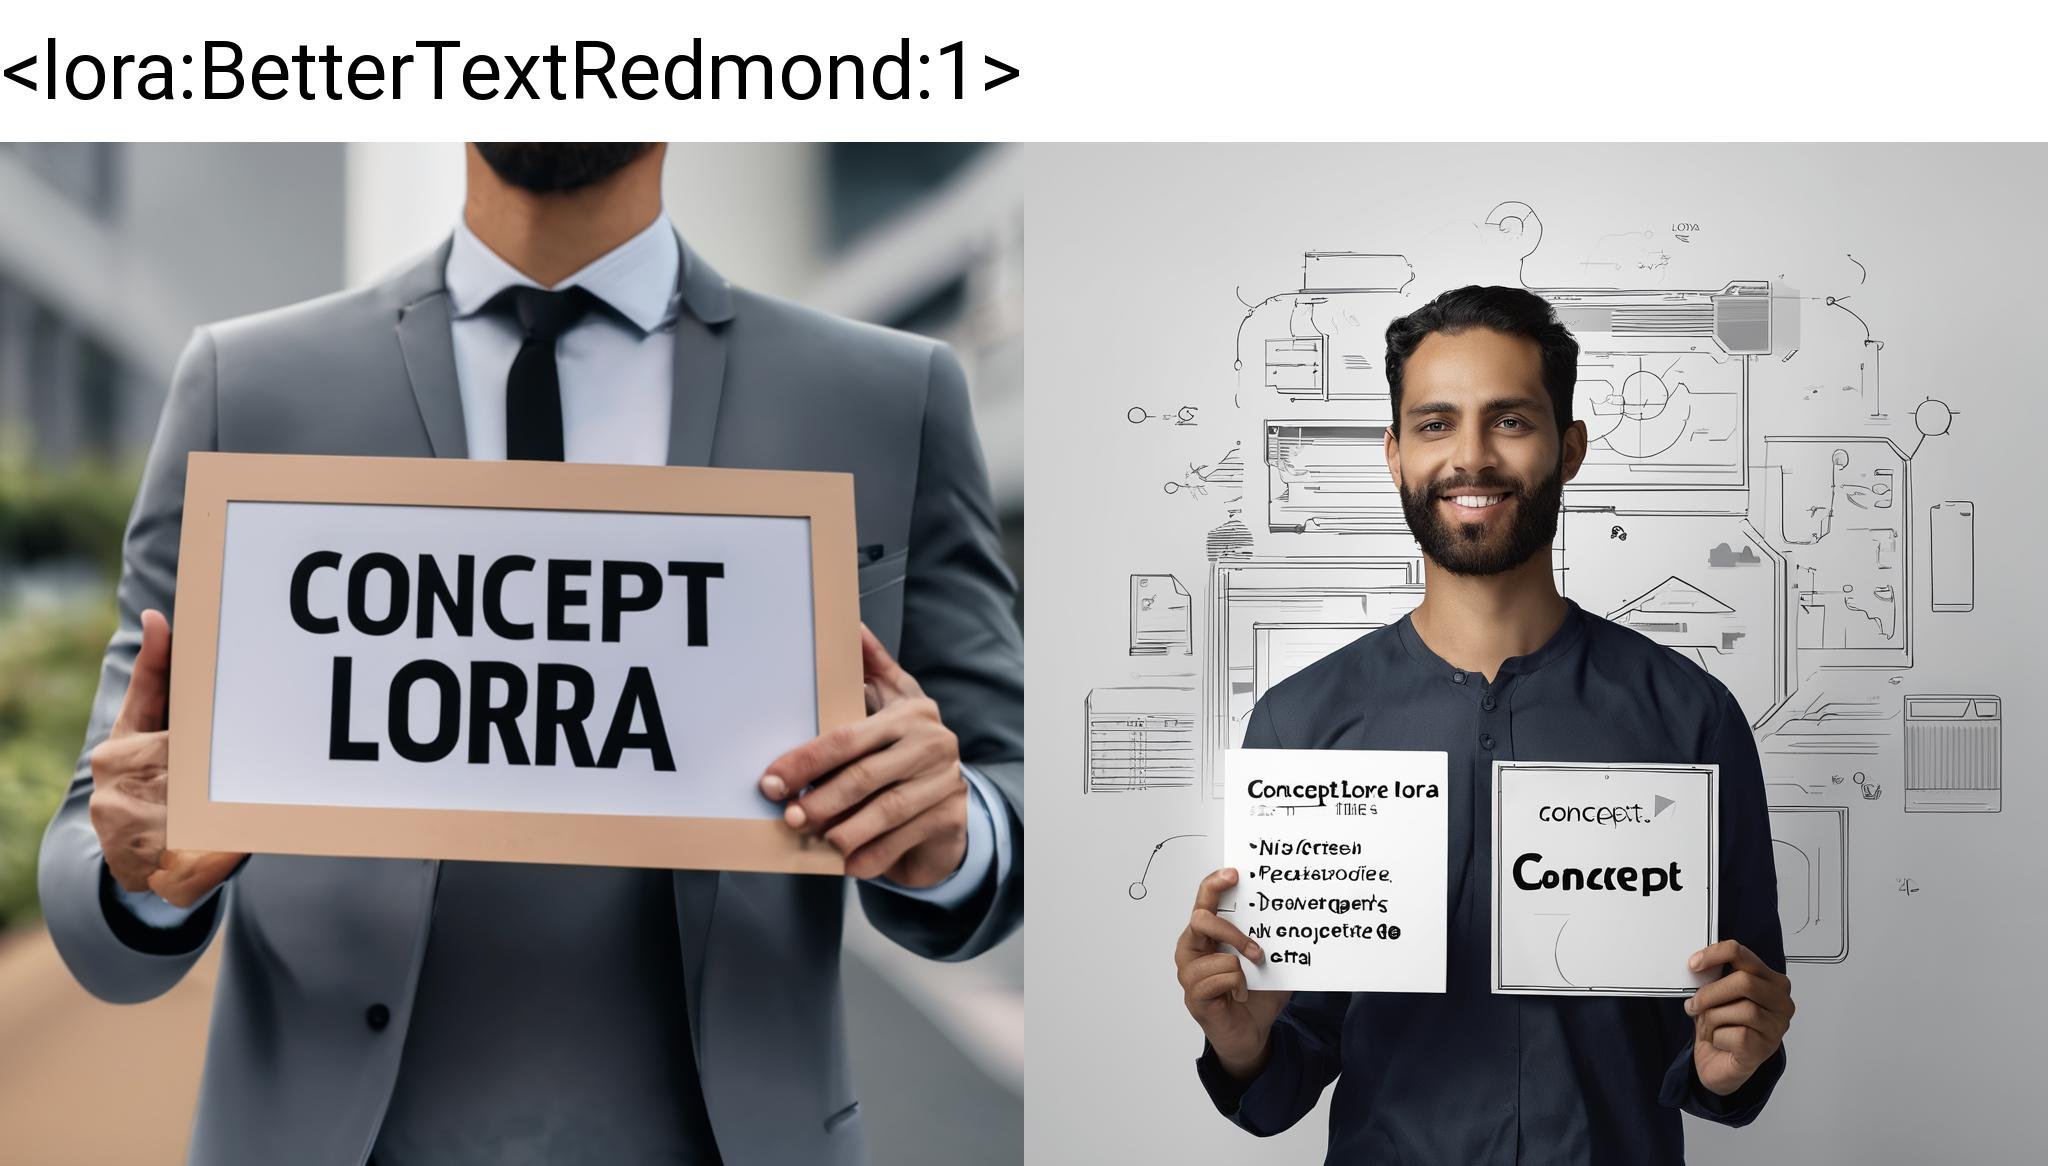 A man holding a sign that say "CONCEPT LORA", "CONCEPT LORA", <lora:BetterTextRedmond:1>